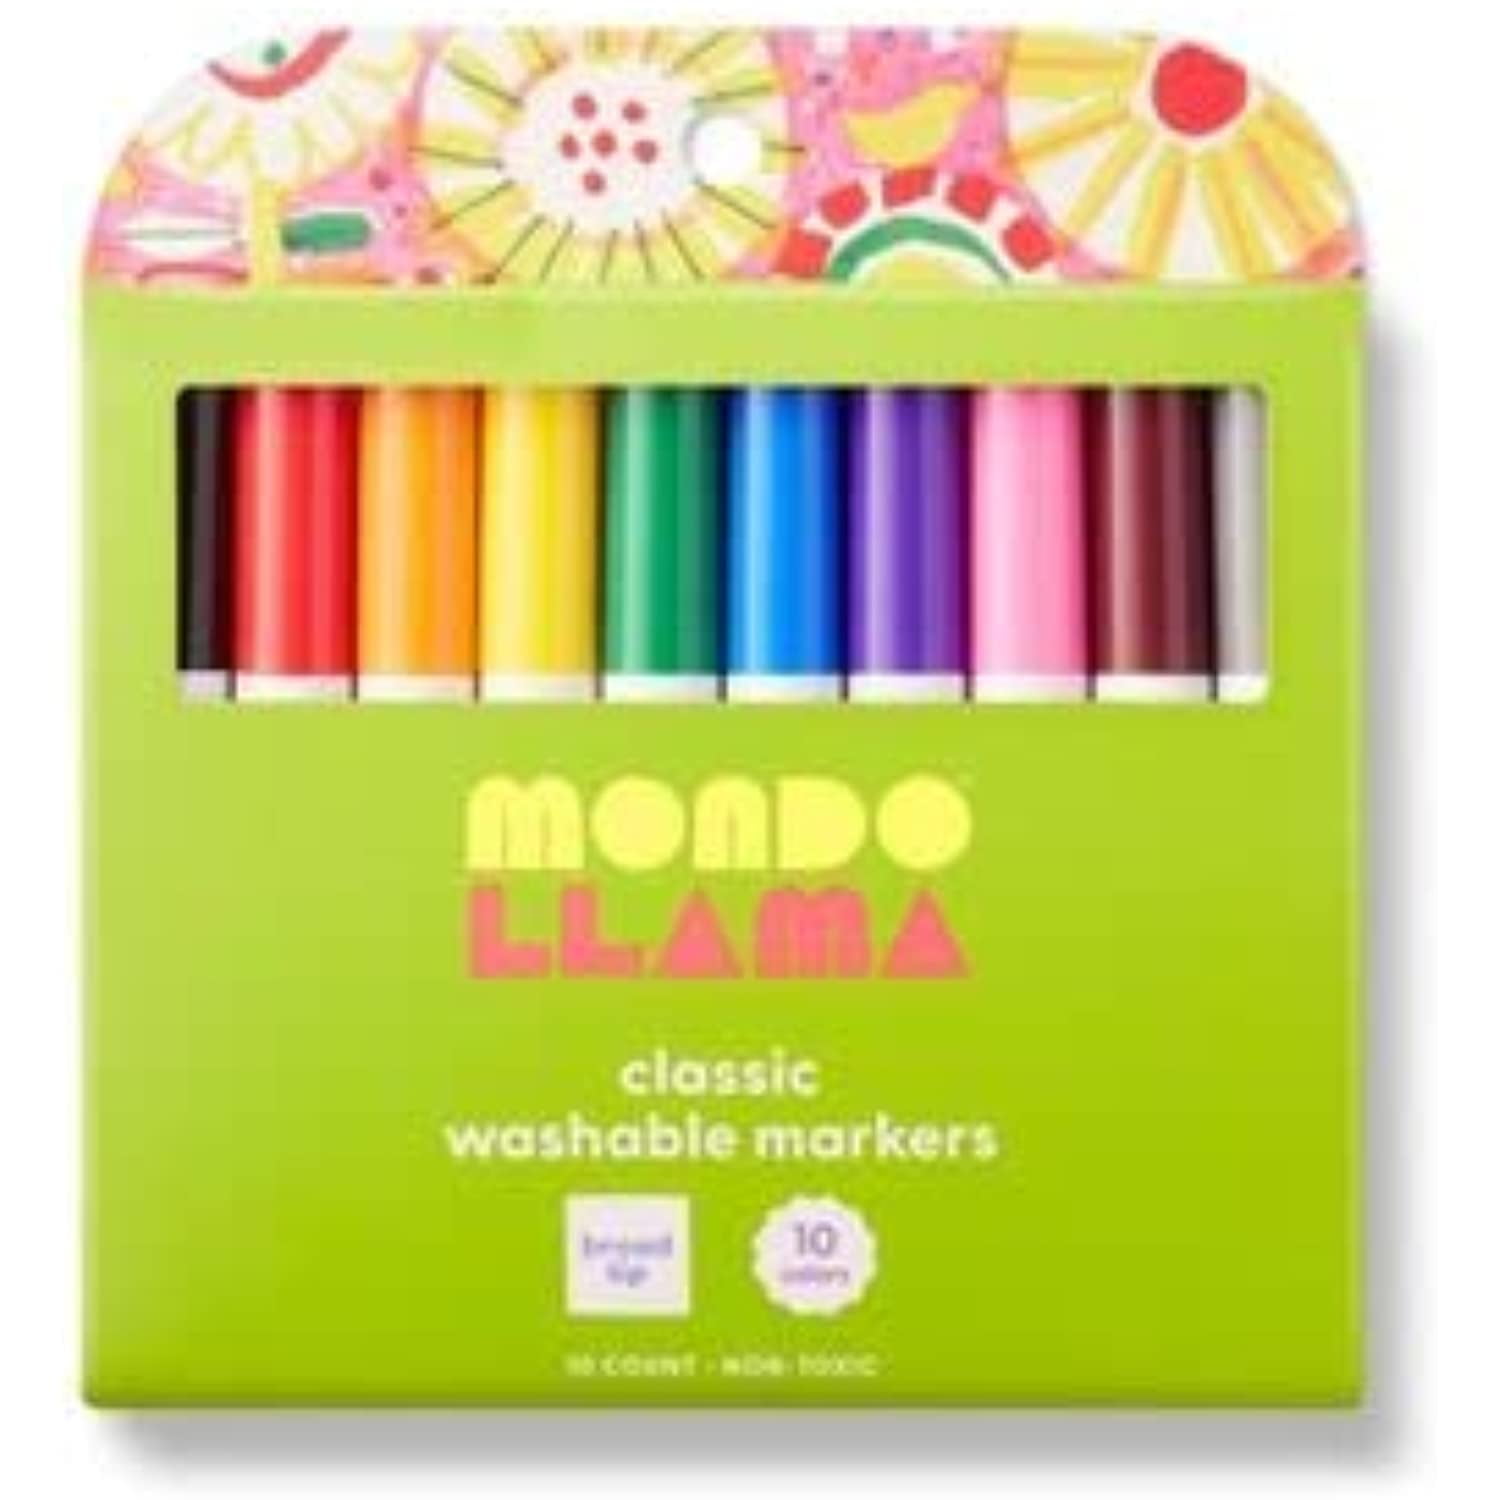 20ct Washable Markers Super Tip Classic Colors - Mondo Llama™ : Target